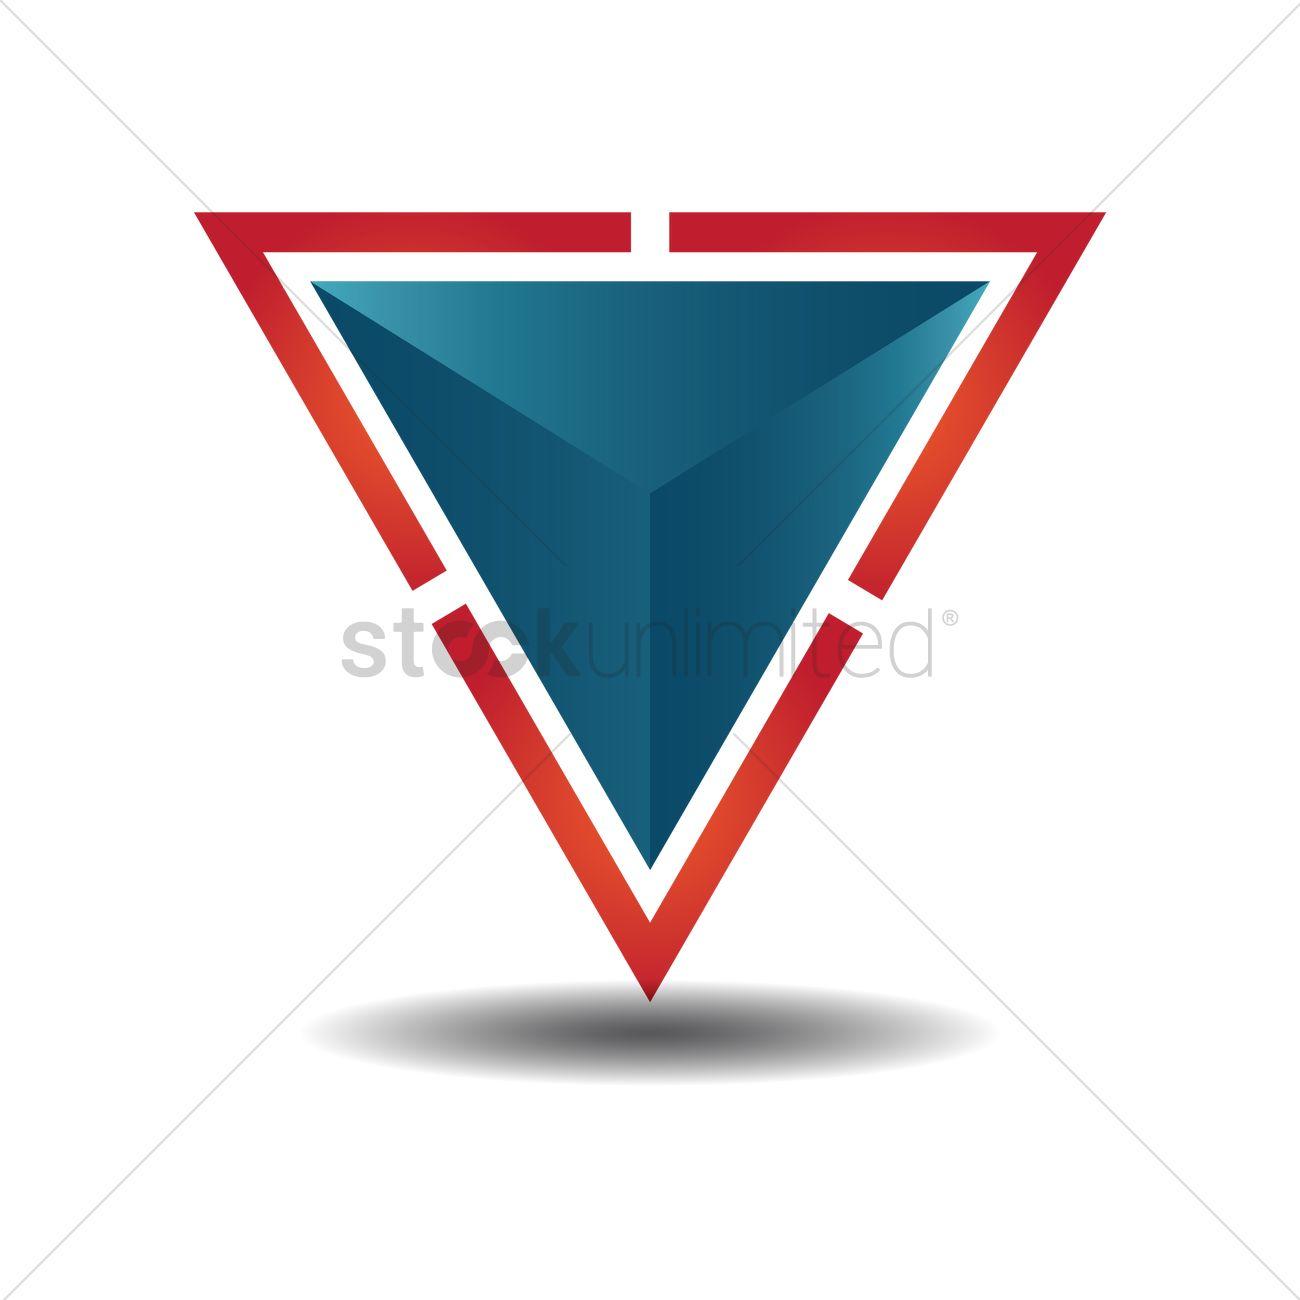 Trianle Logo - Triangle logo element Vector Image - 1939921 | StockUnlimited